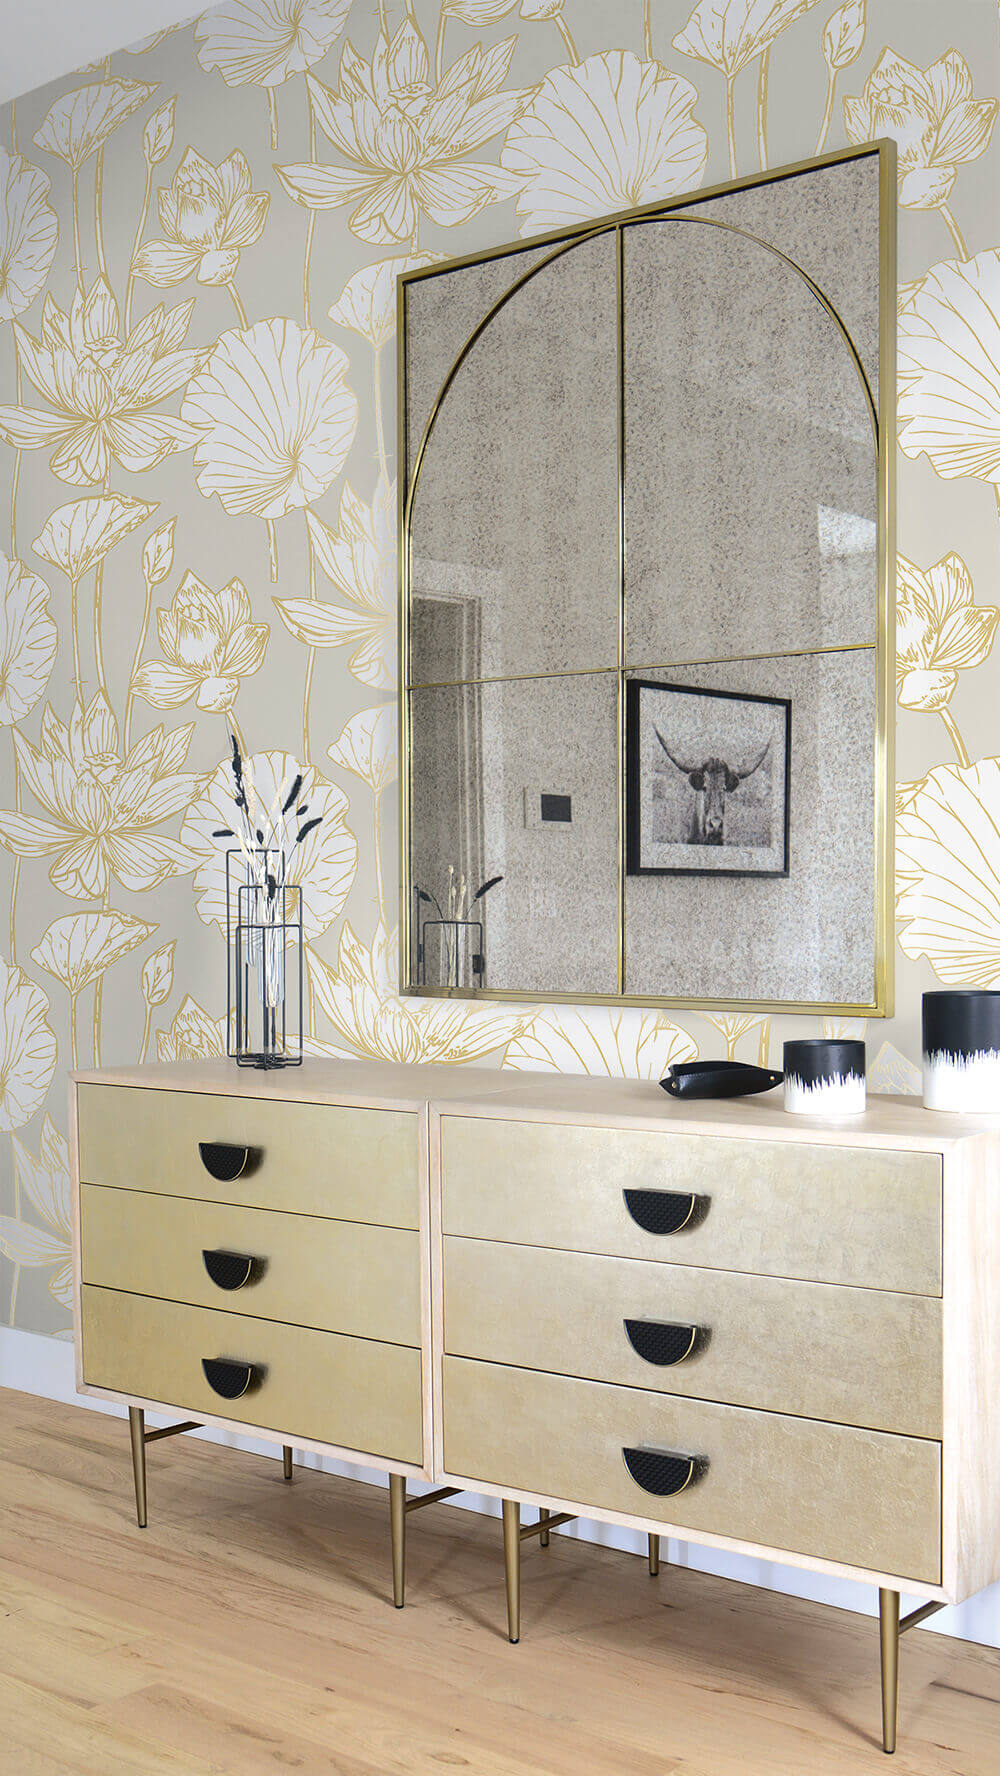 NextWall Lotus Floral Peel & Stick Wallpaper - Gray & Gold